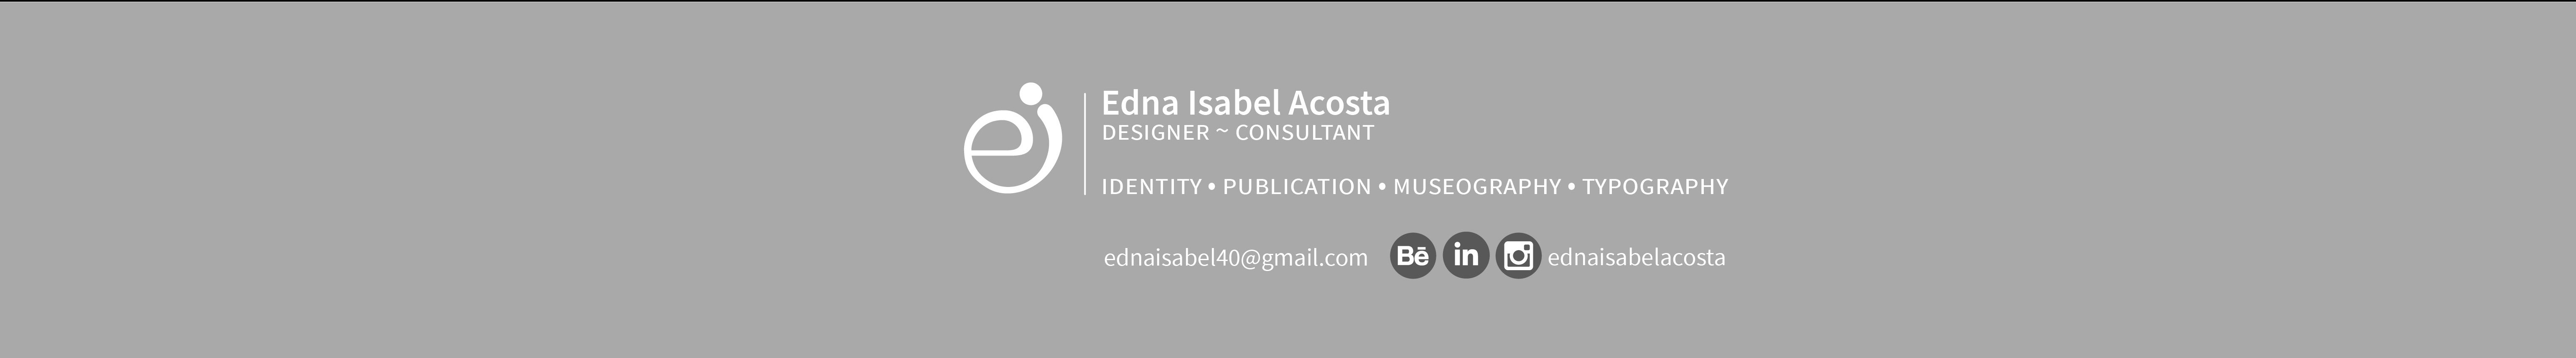 Edna Isabel Acosta's profile banner